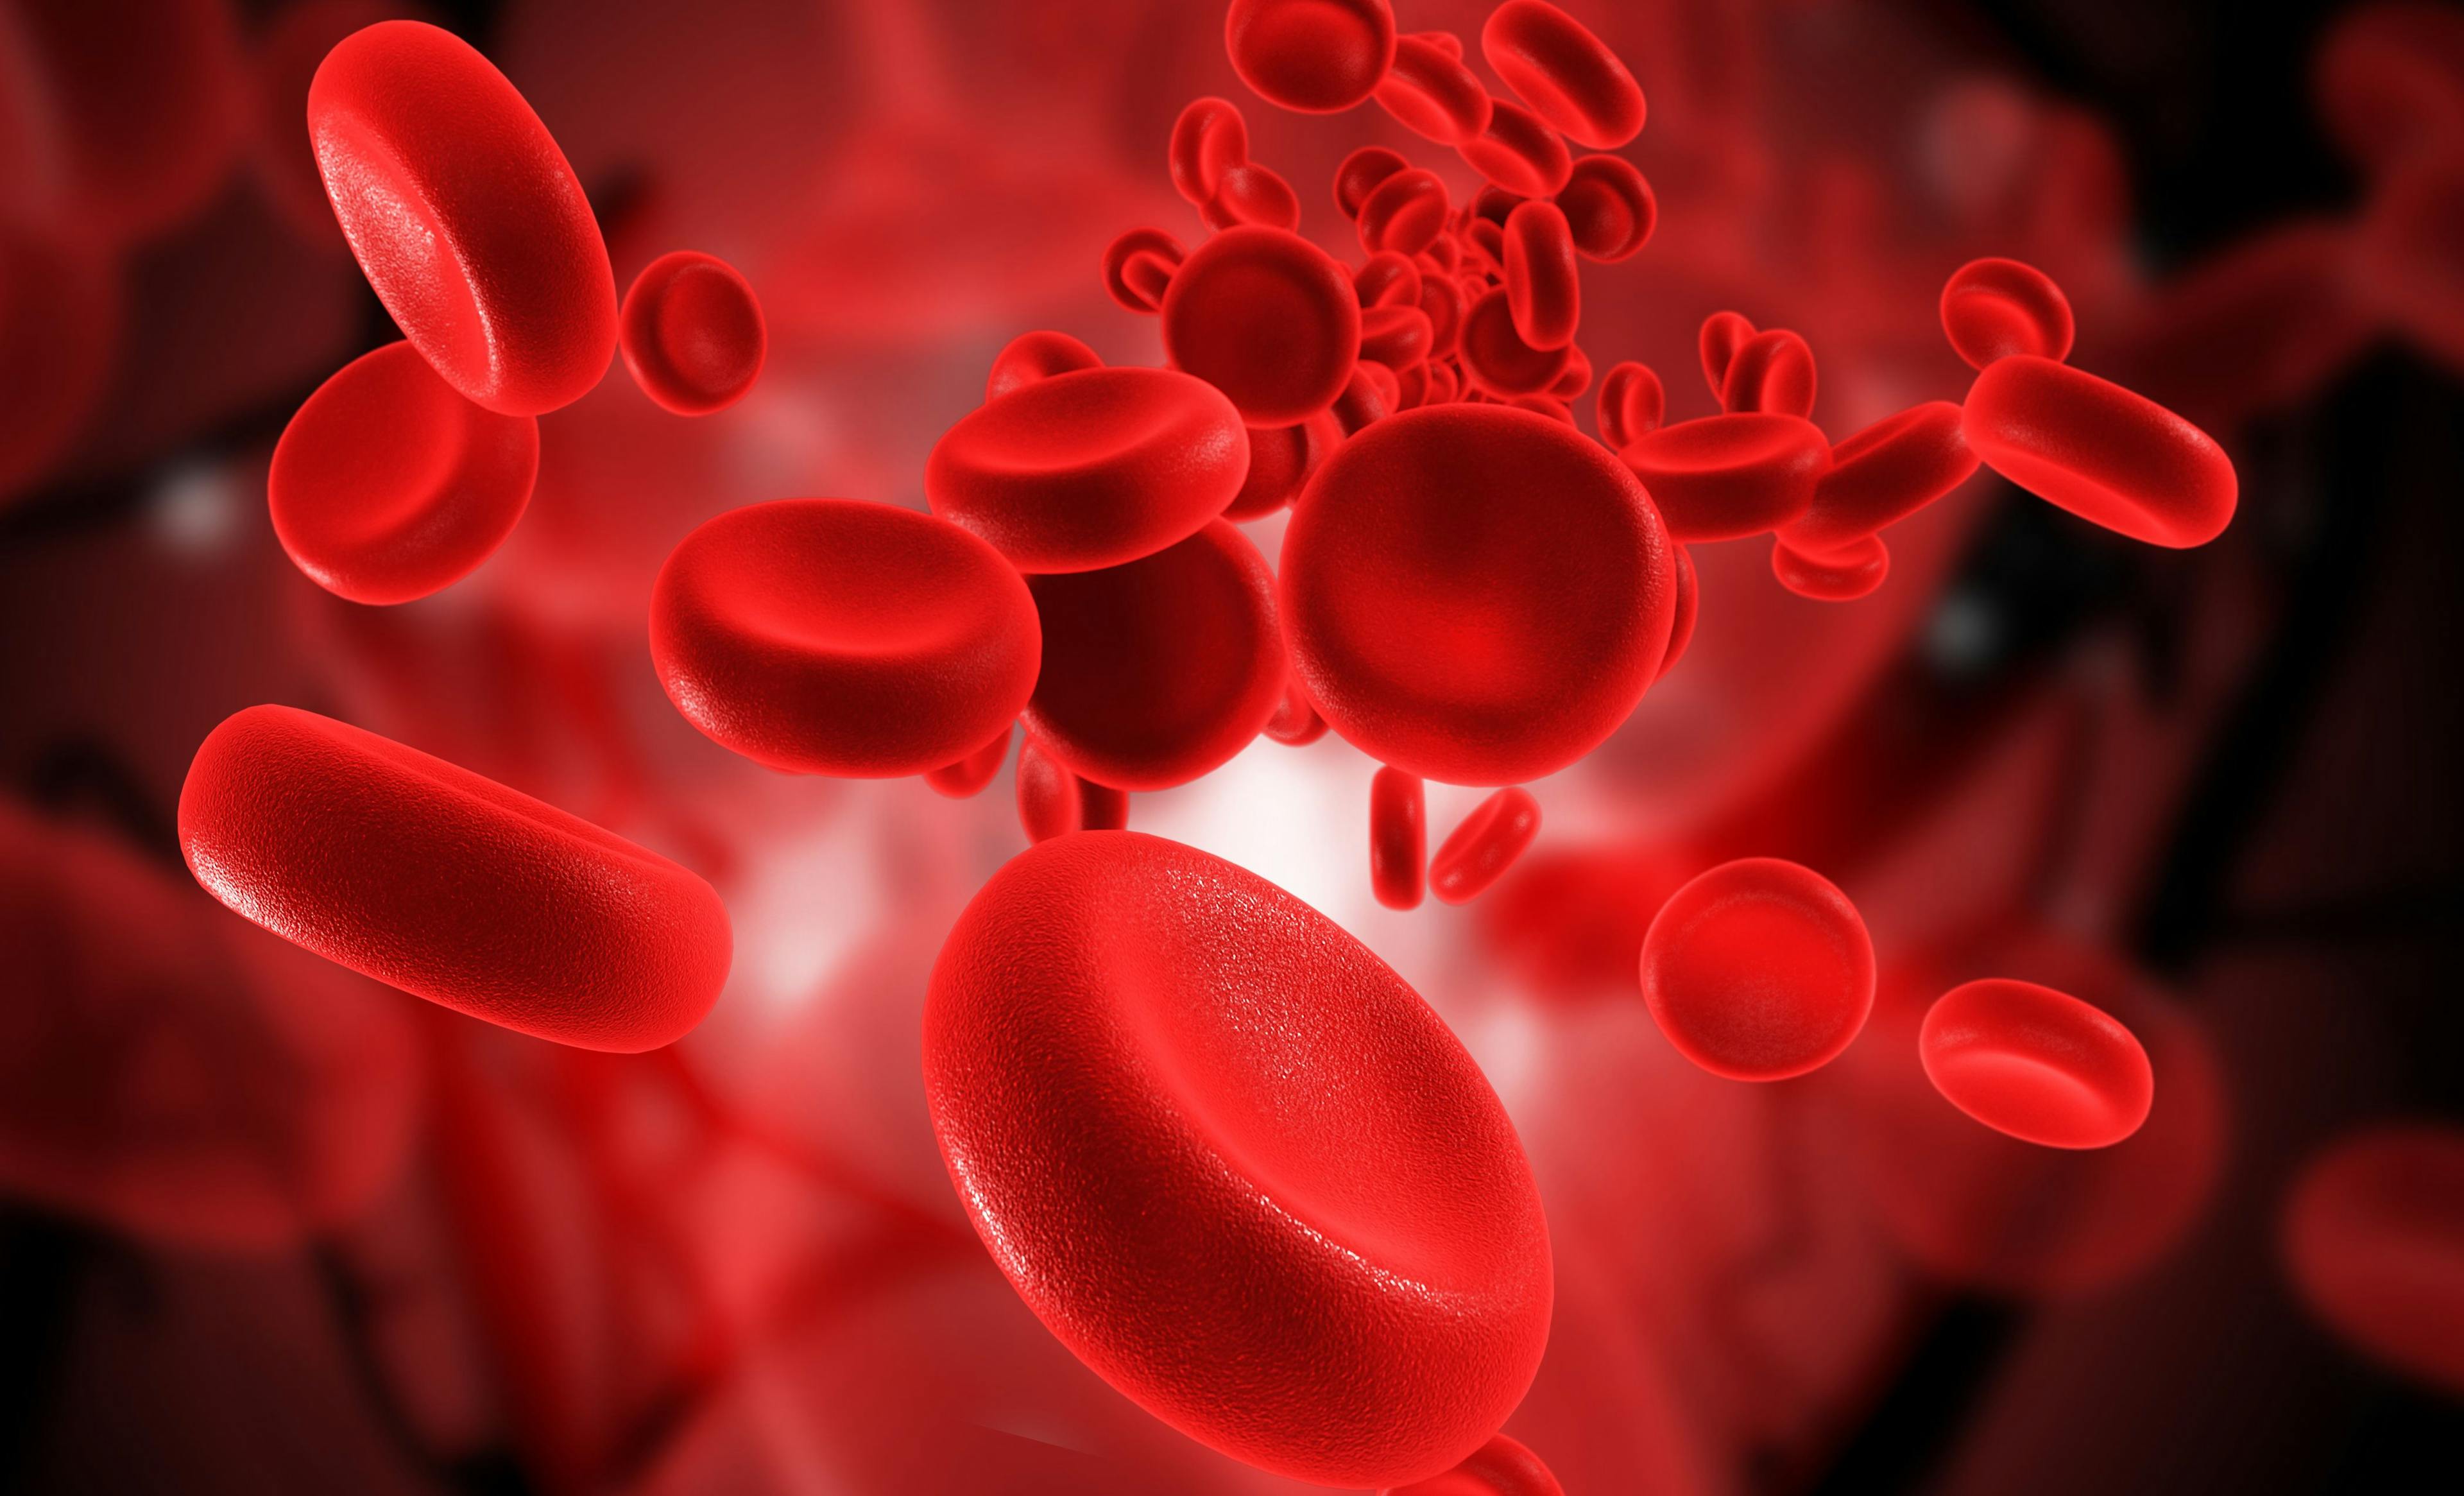 blood cells | Image Credit: © abhijith3747 – stock.adobe.com